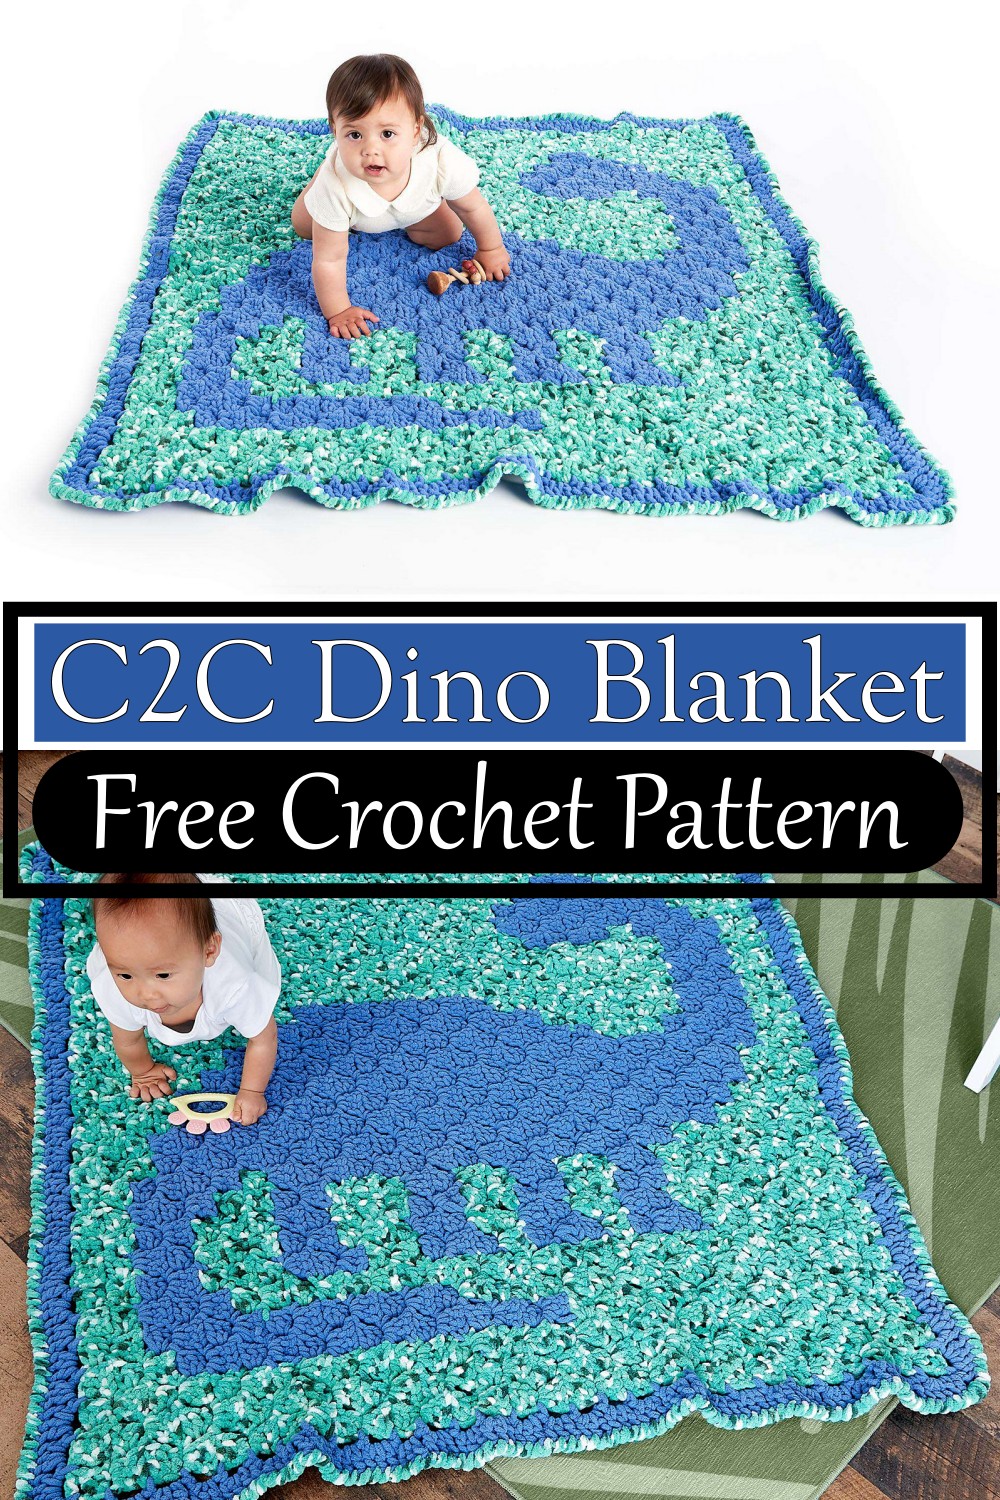 C2C Dino Blanket